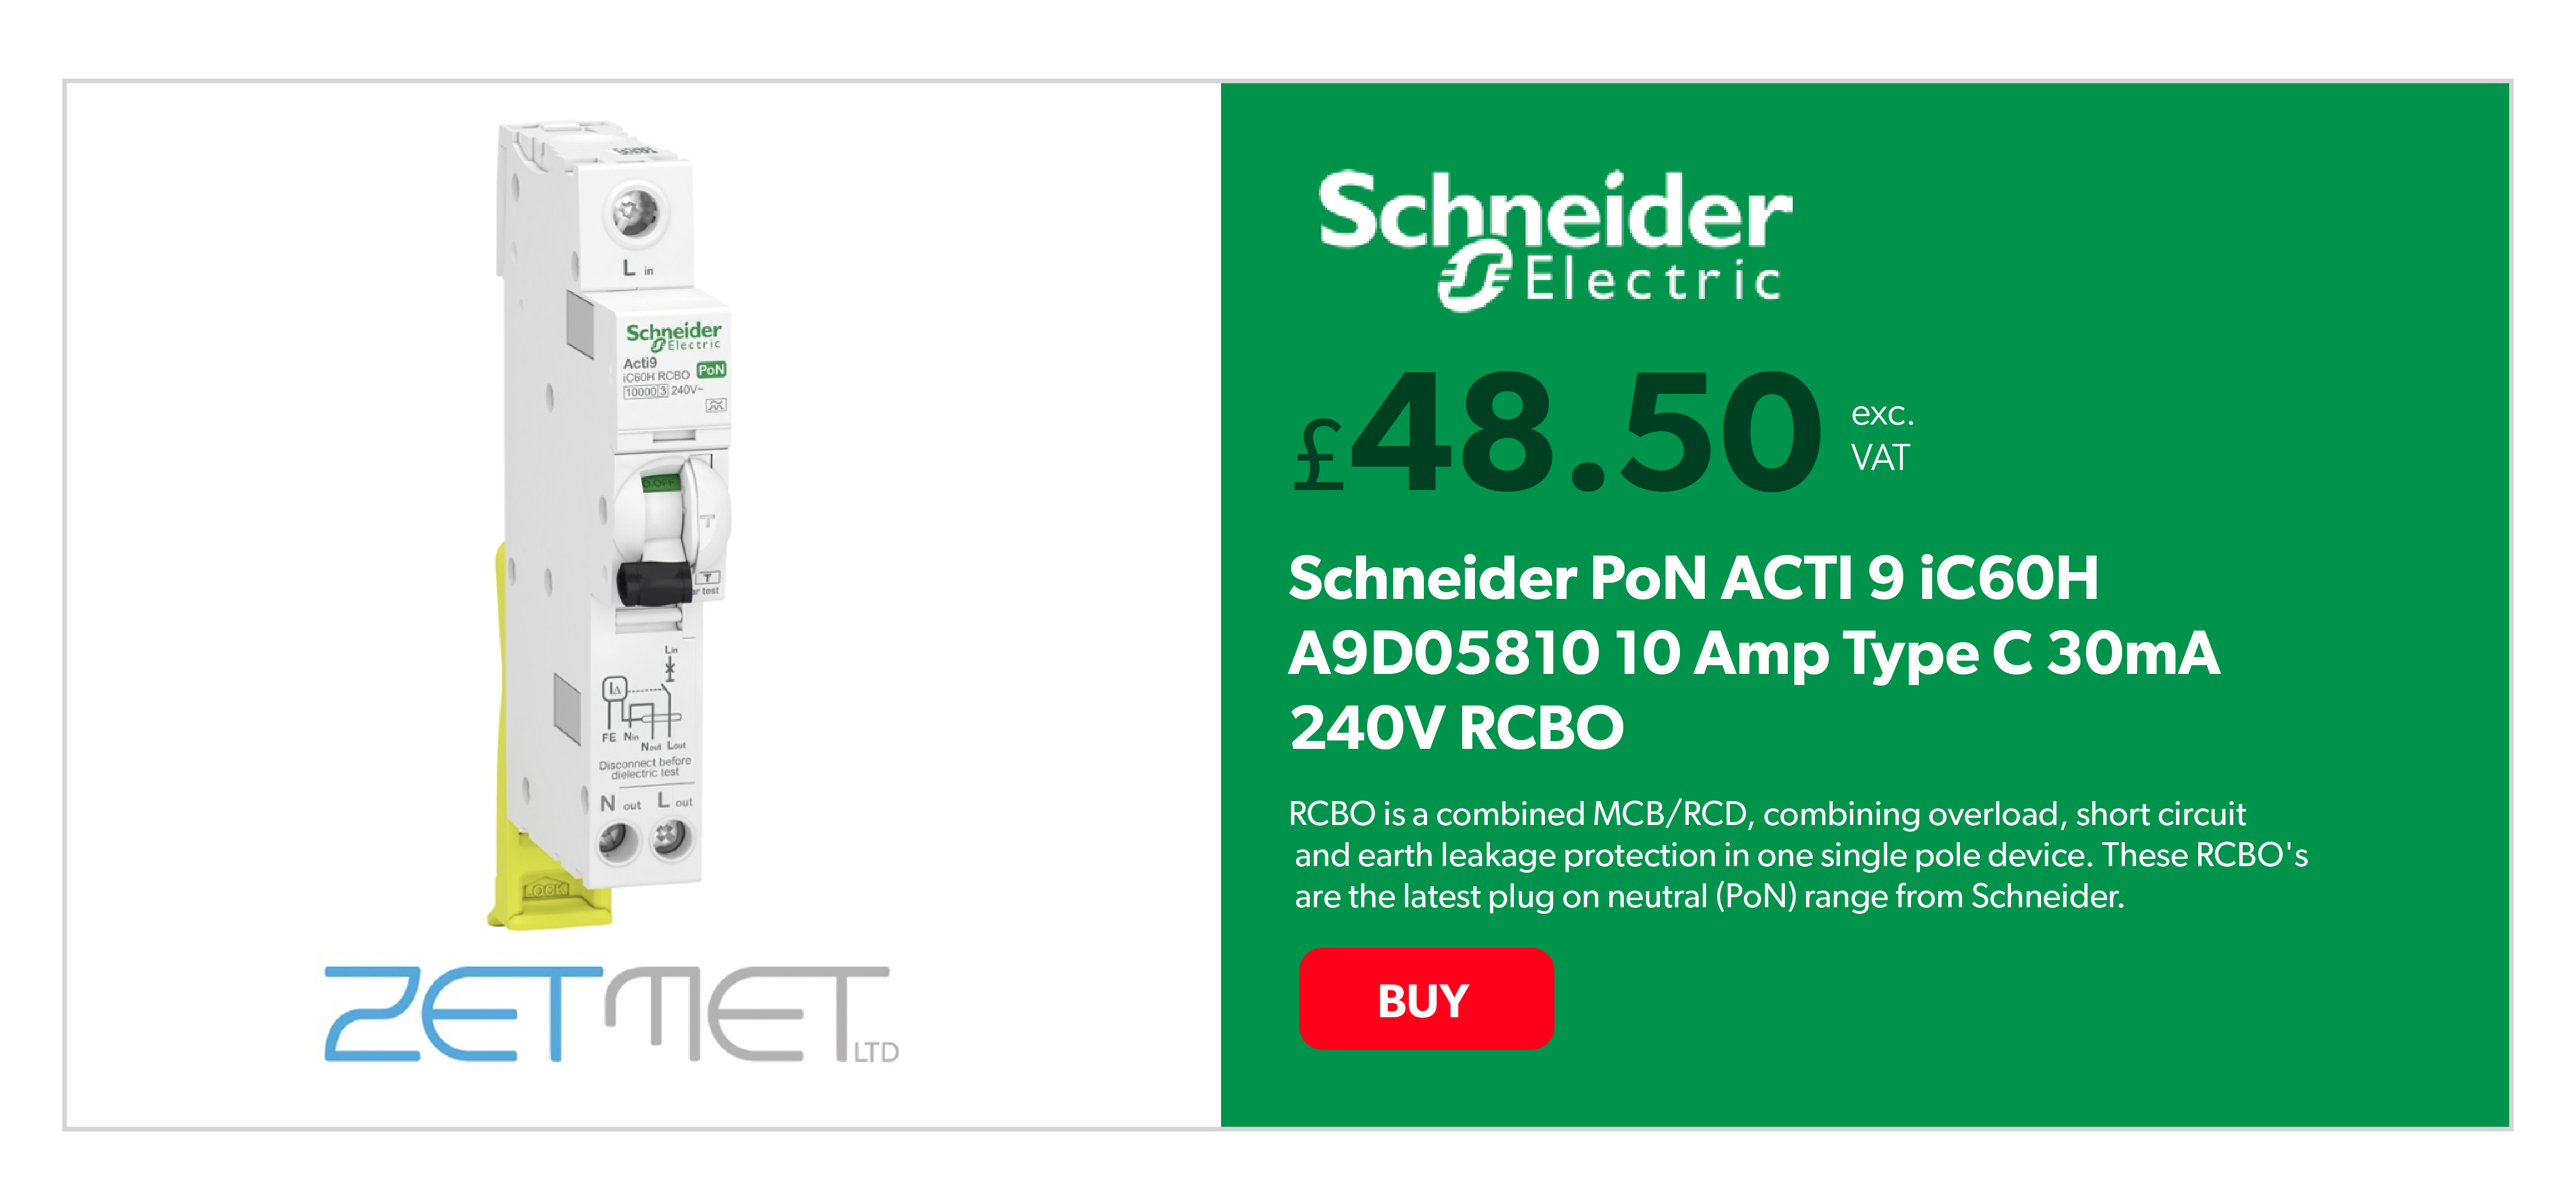 Schneider PoN ACTI 9 iC60H A9D05810 10 Amp Type C 30mA 240V RCBO